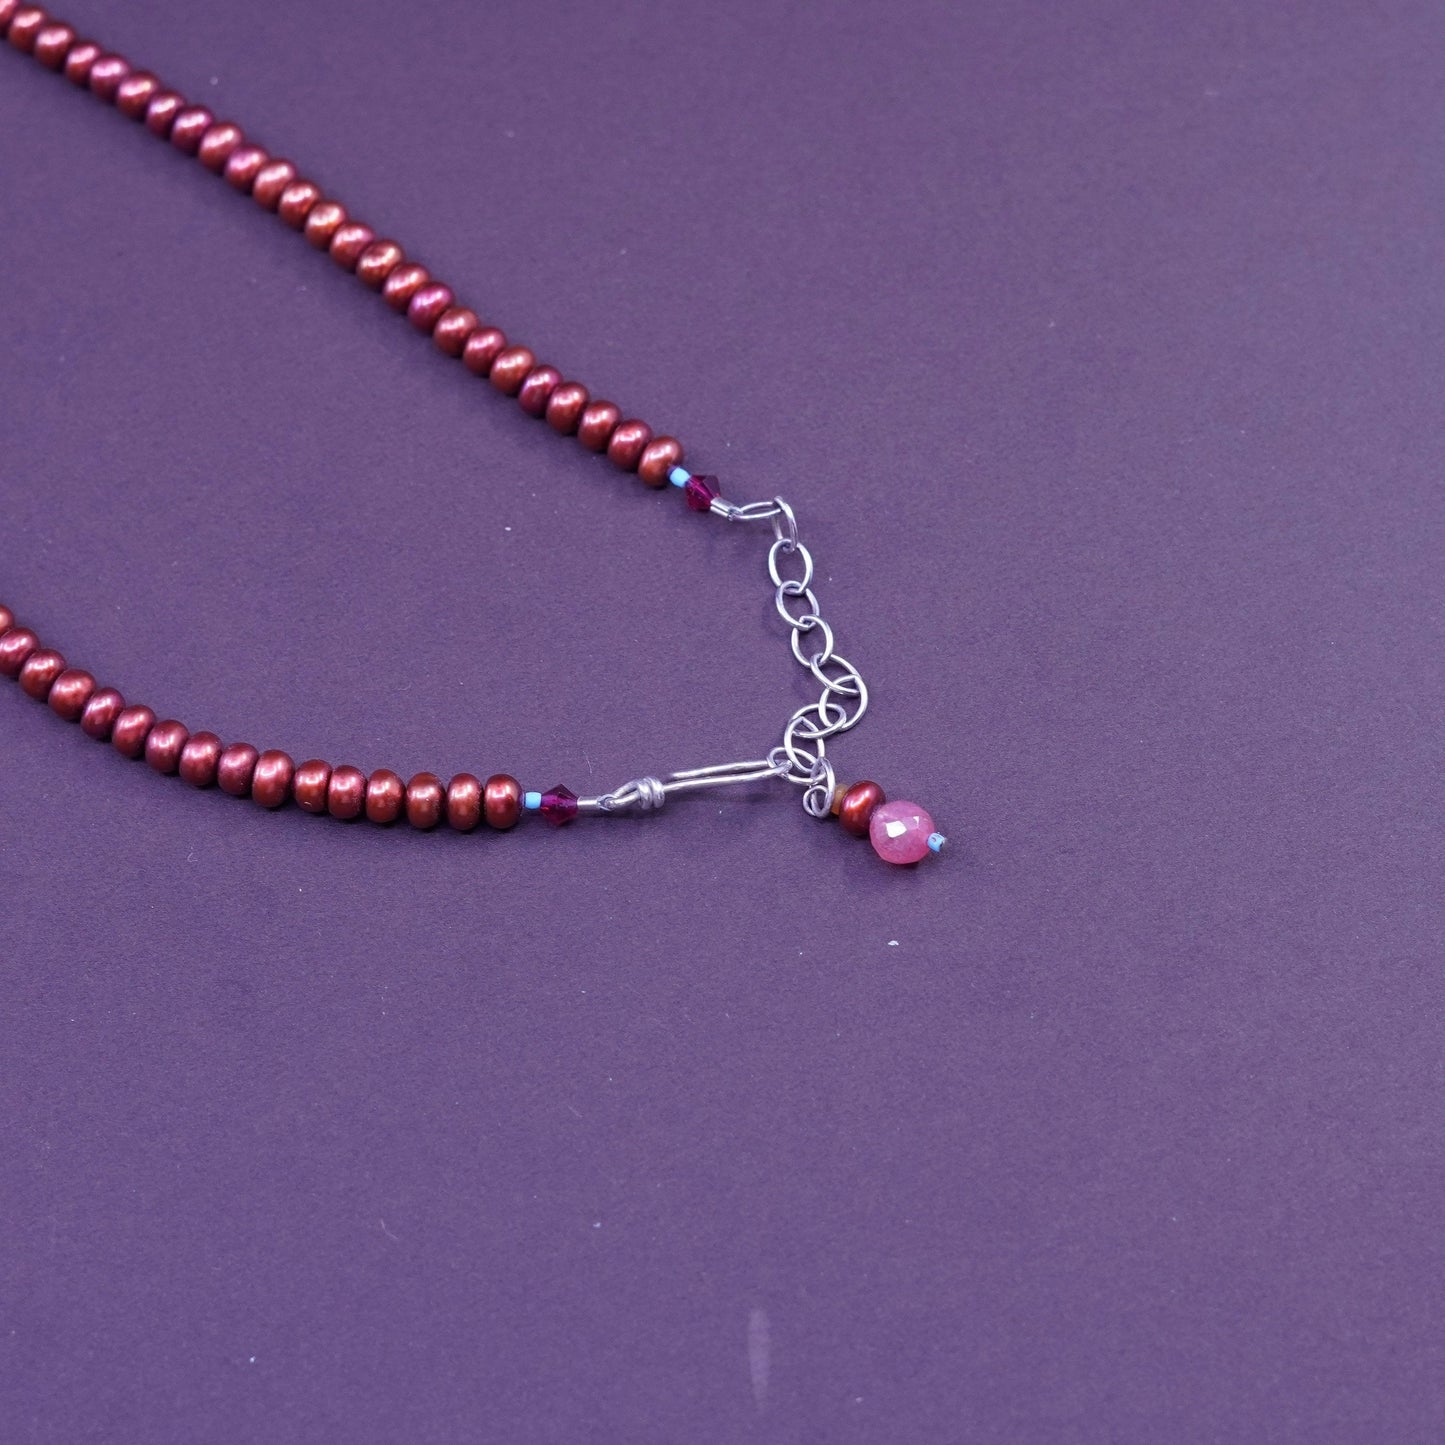 16+1.5” Vintage Sterling silver Handmade necklace w/ pearl rose quartz pendant